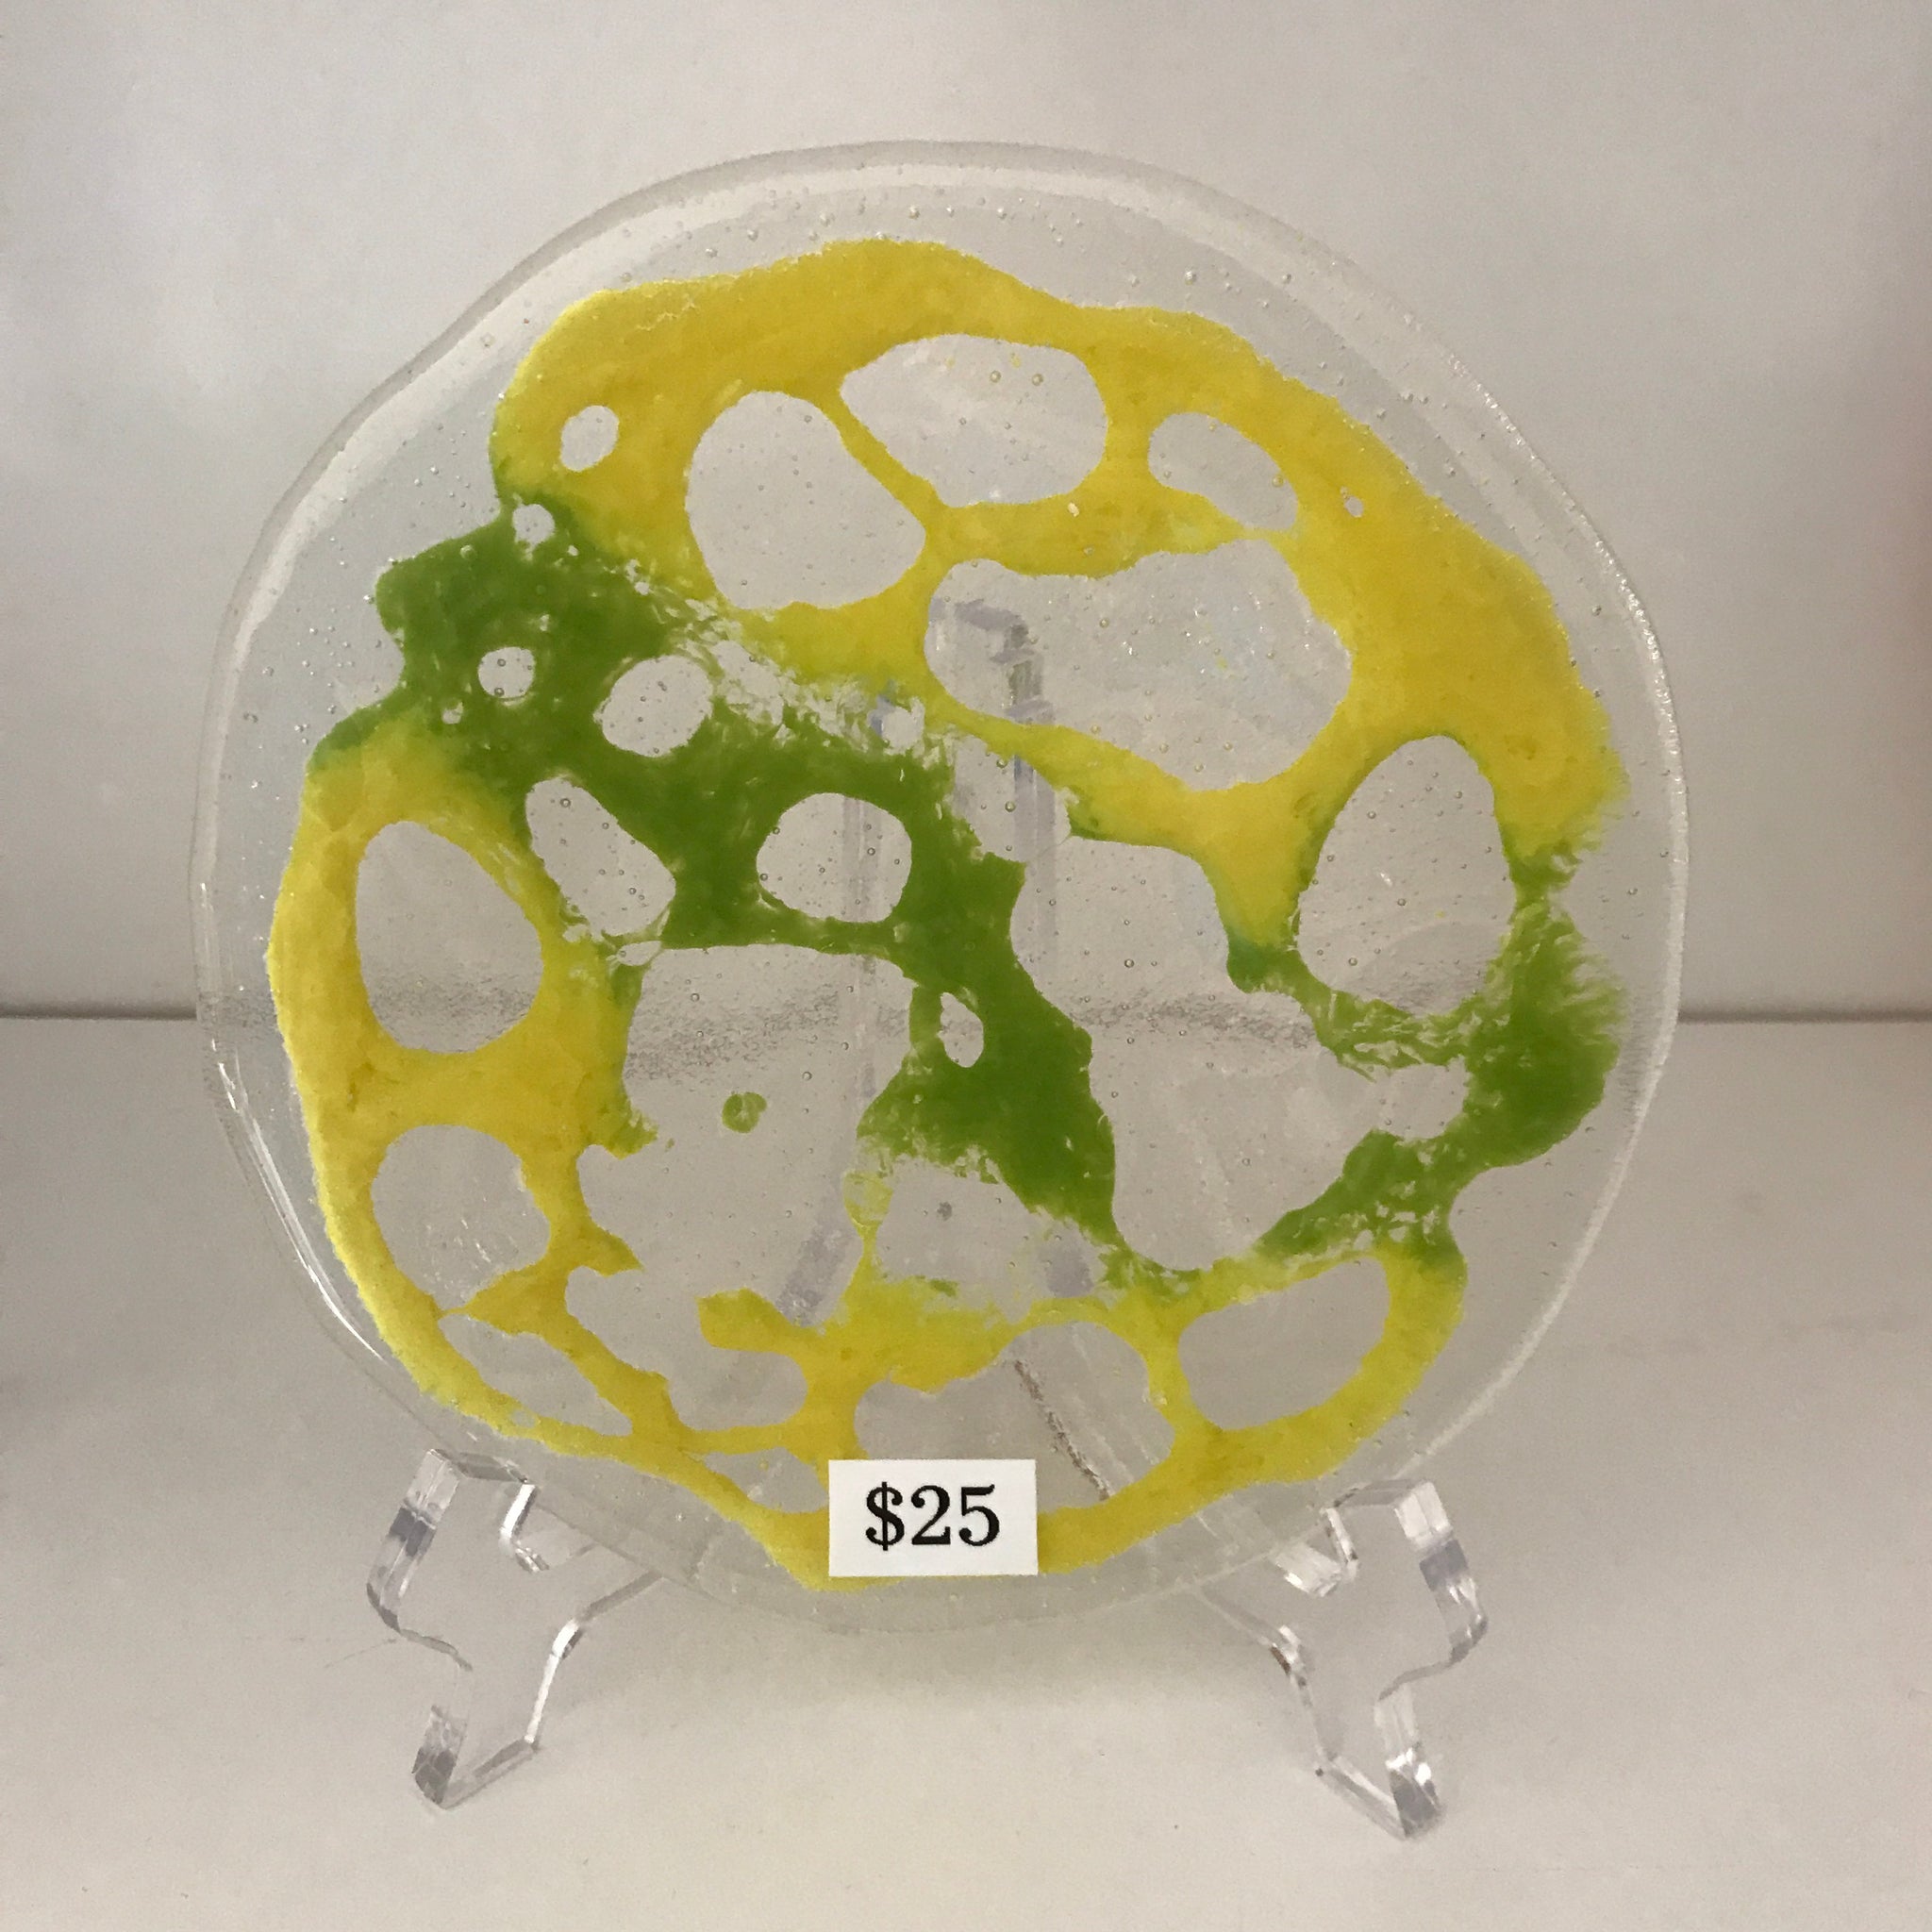 Round fused glass plate 004 - 5" diameter